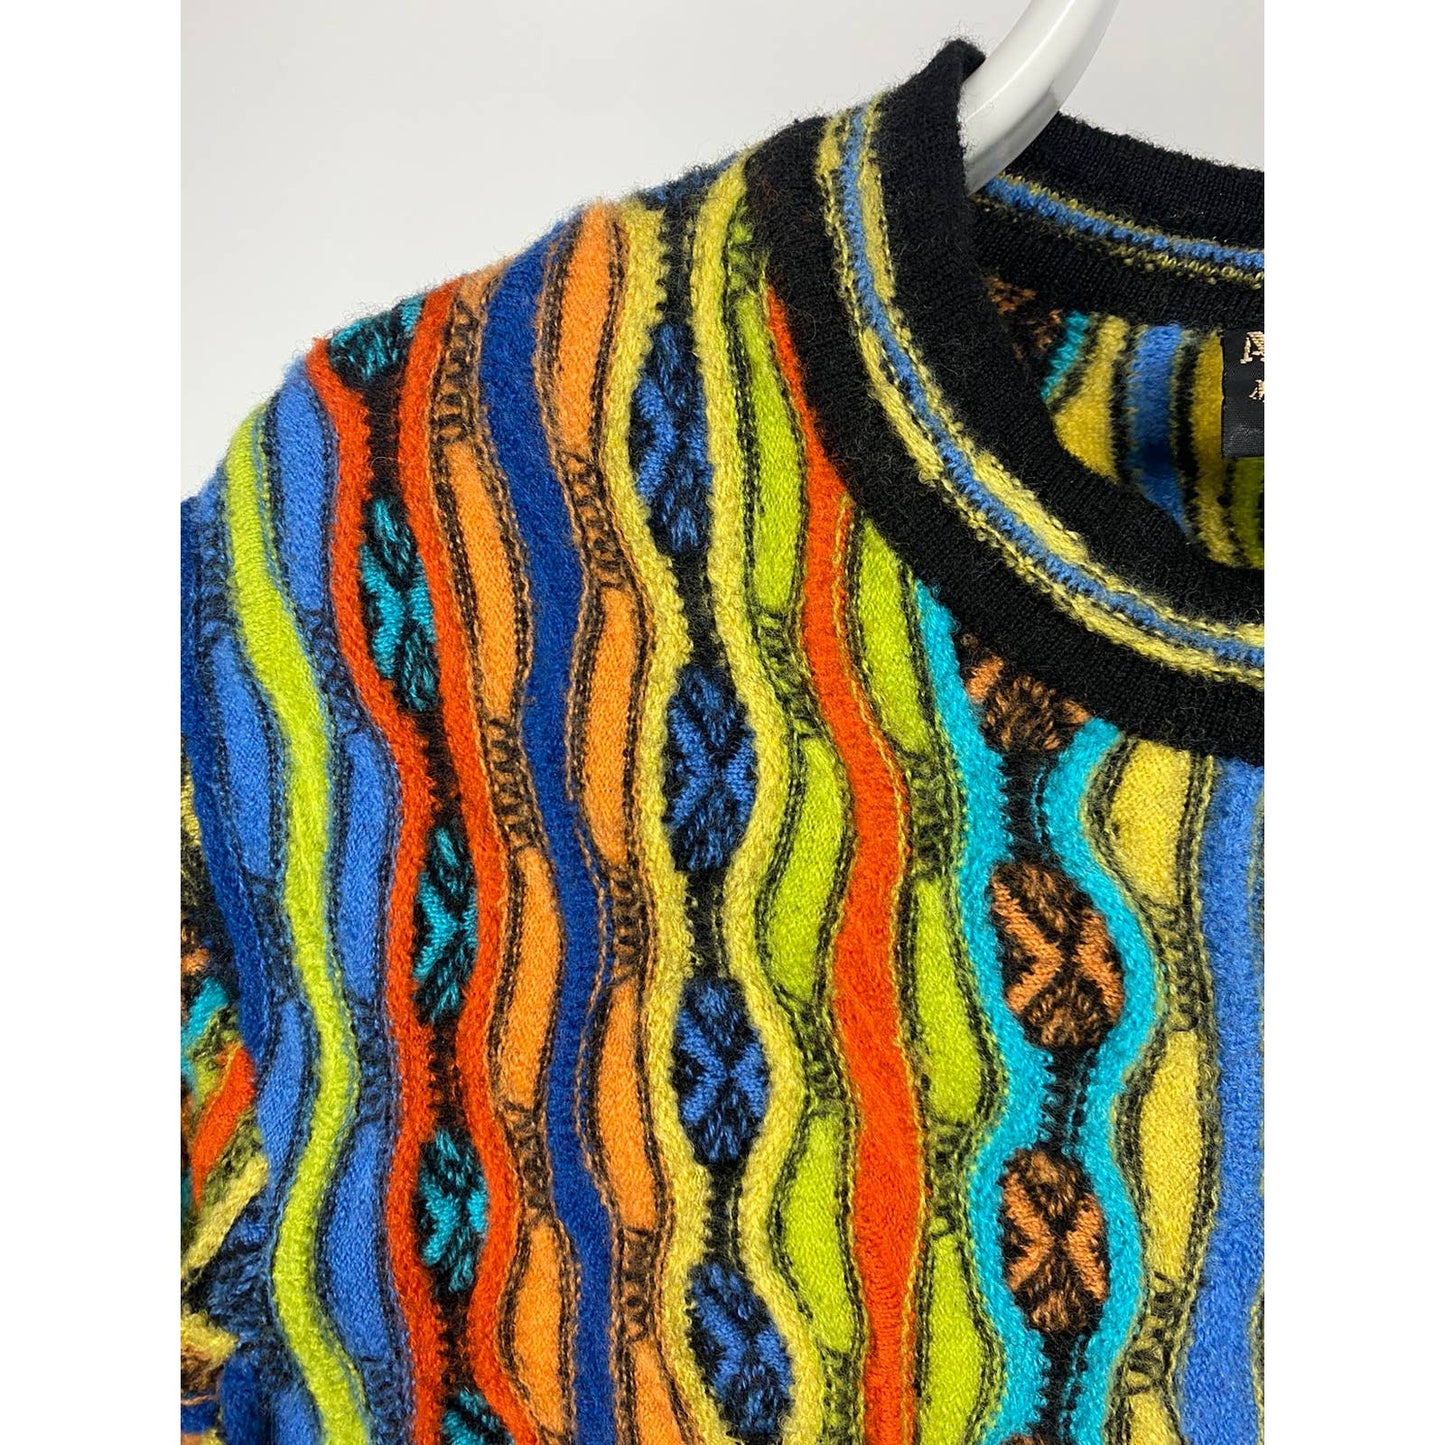 Coogi Soul of Australia vintage multicolor sweater